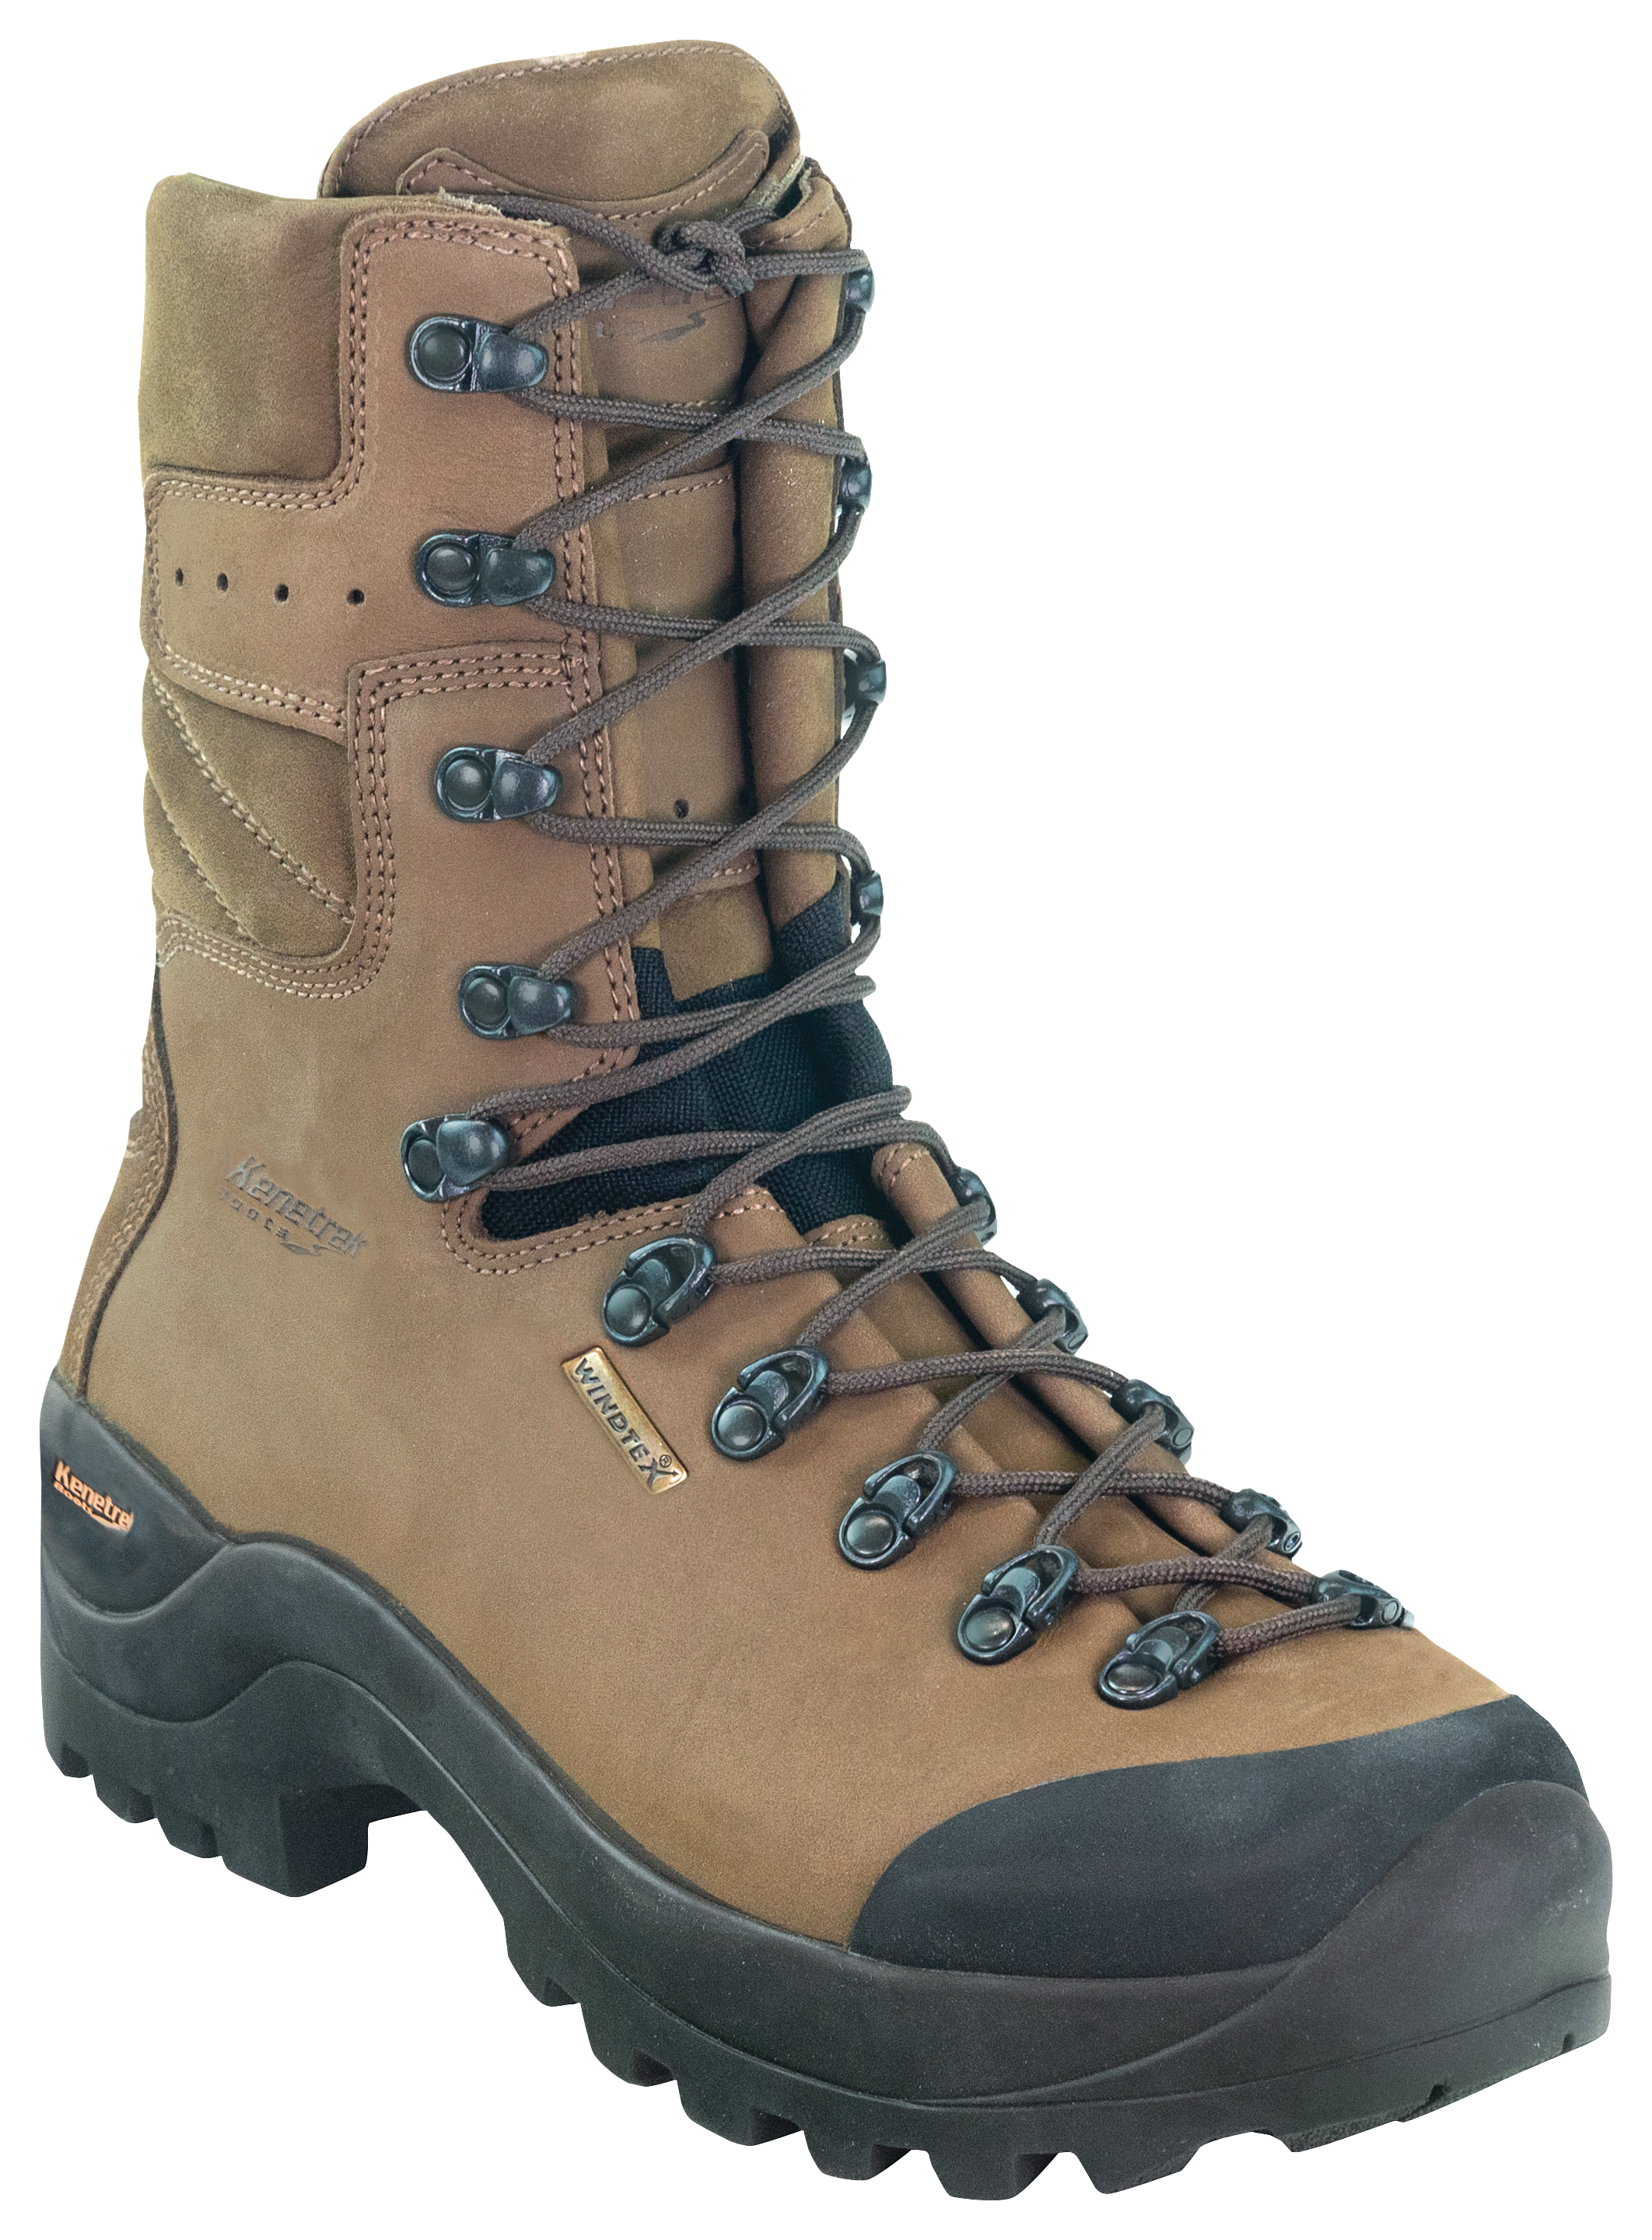 Kenetrek Mountain Guide Waterproof Hunting Boots for Men - Brown - 10 5M